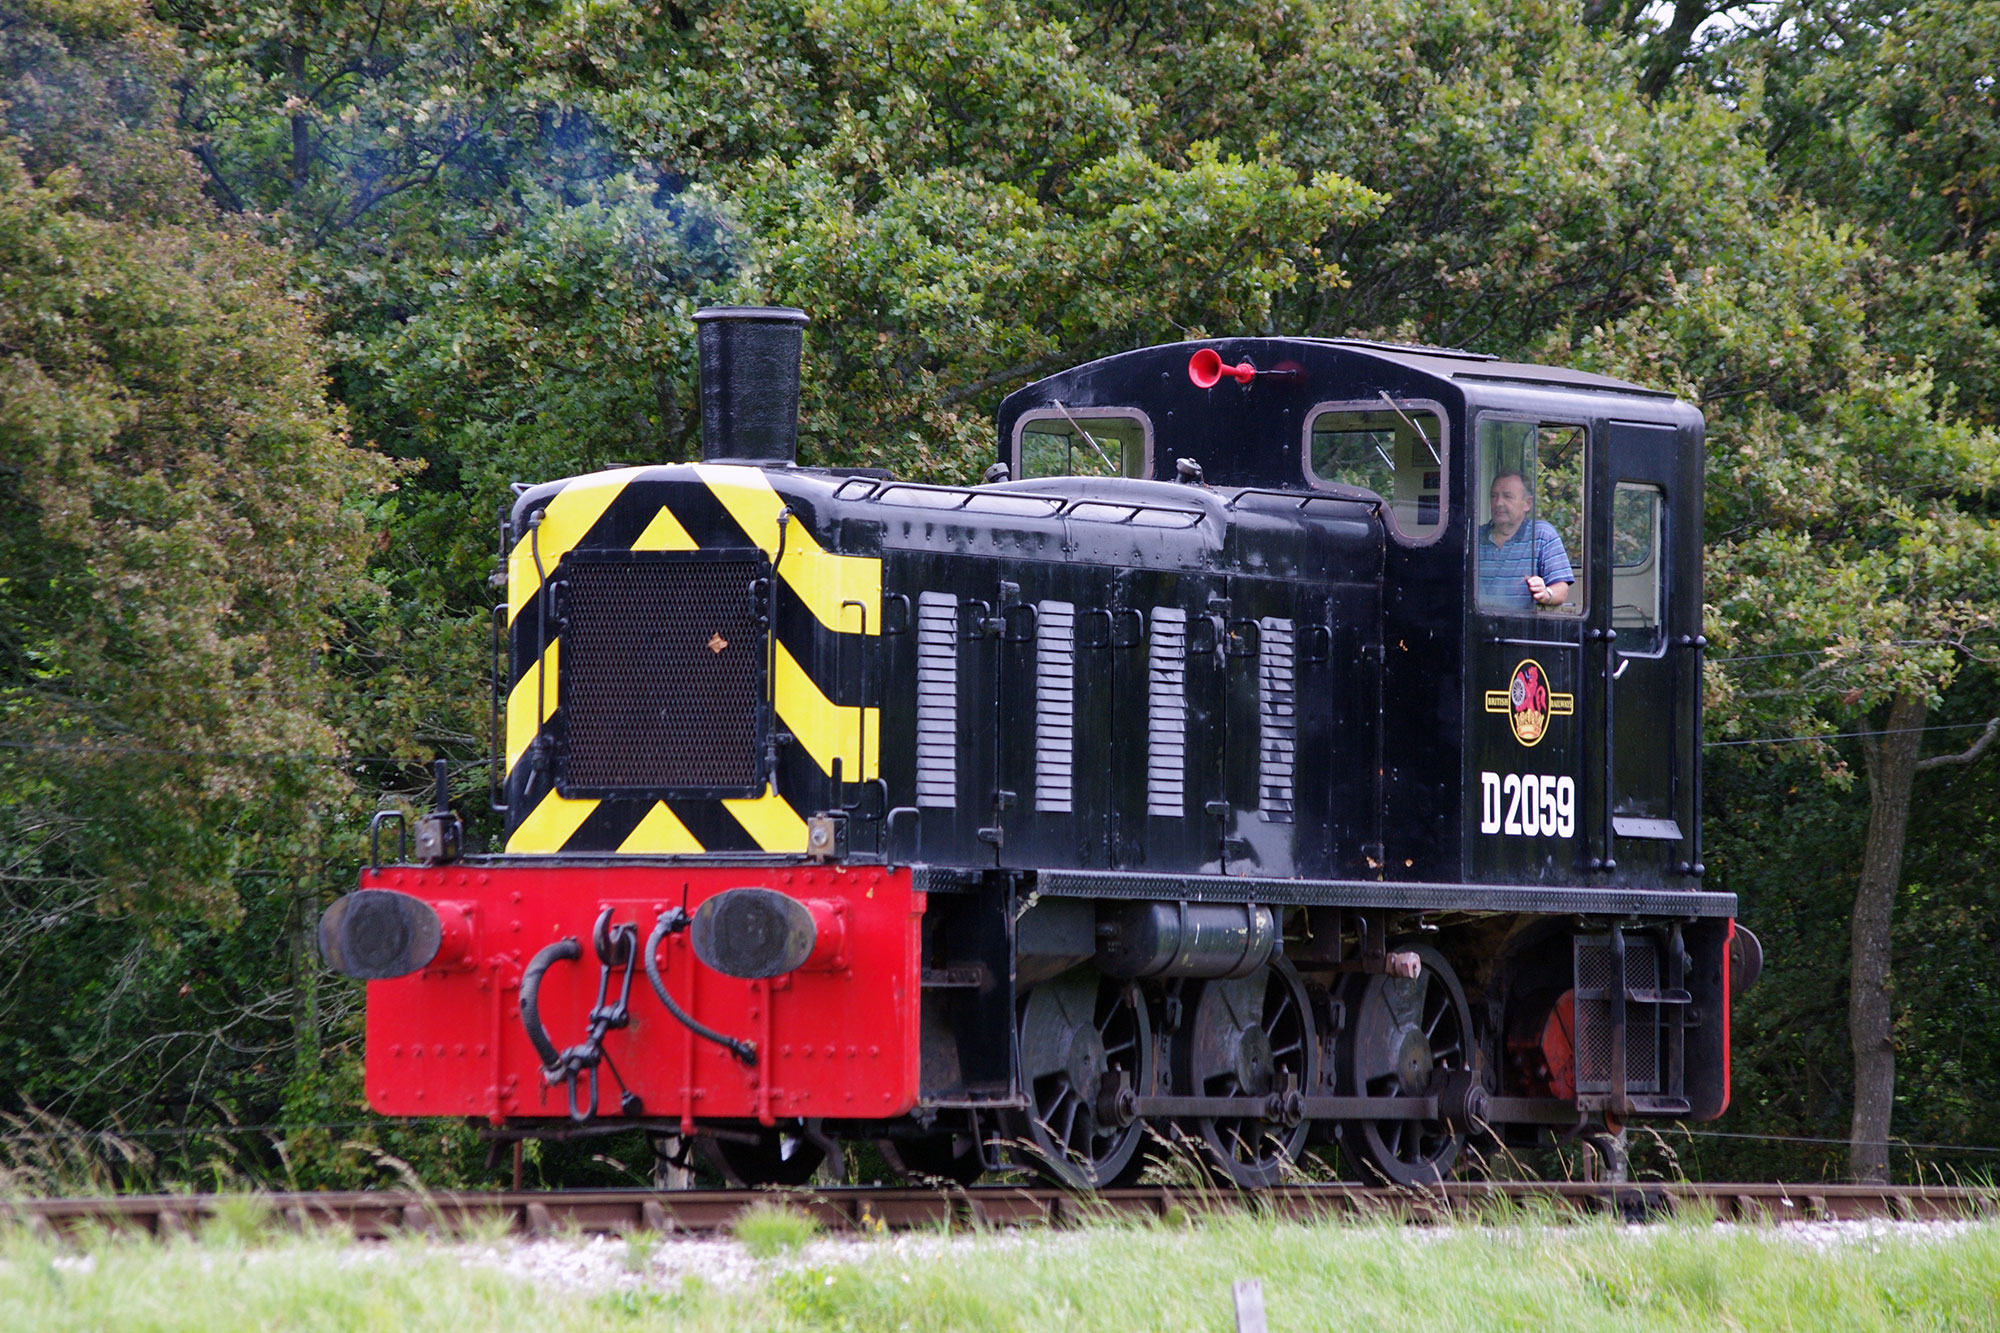 British Railways Locomotives